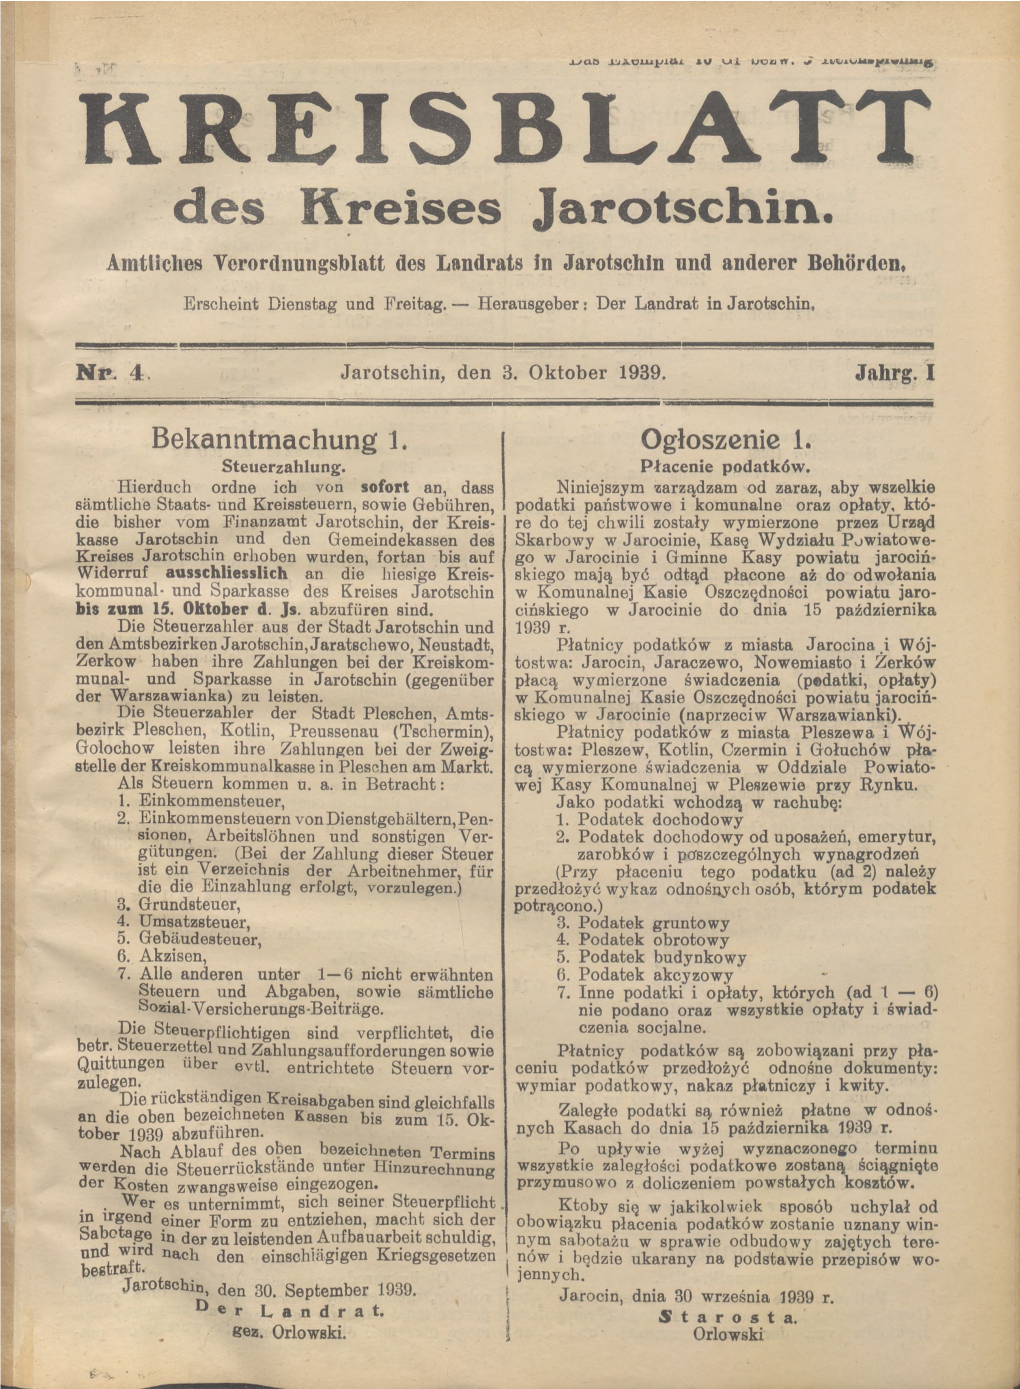 Des Lireises Jarotschin. Amtliclies Vcrordnungsblatt Des Landrats in Jarotschin Und Anderer Behorden